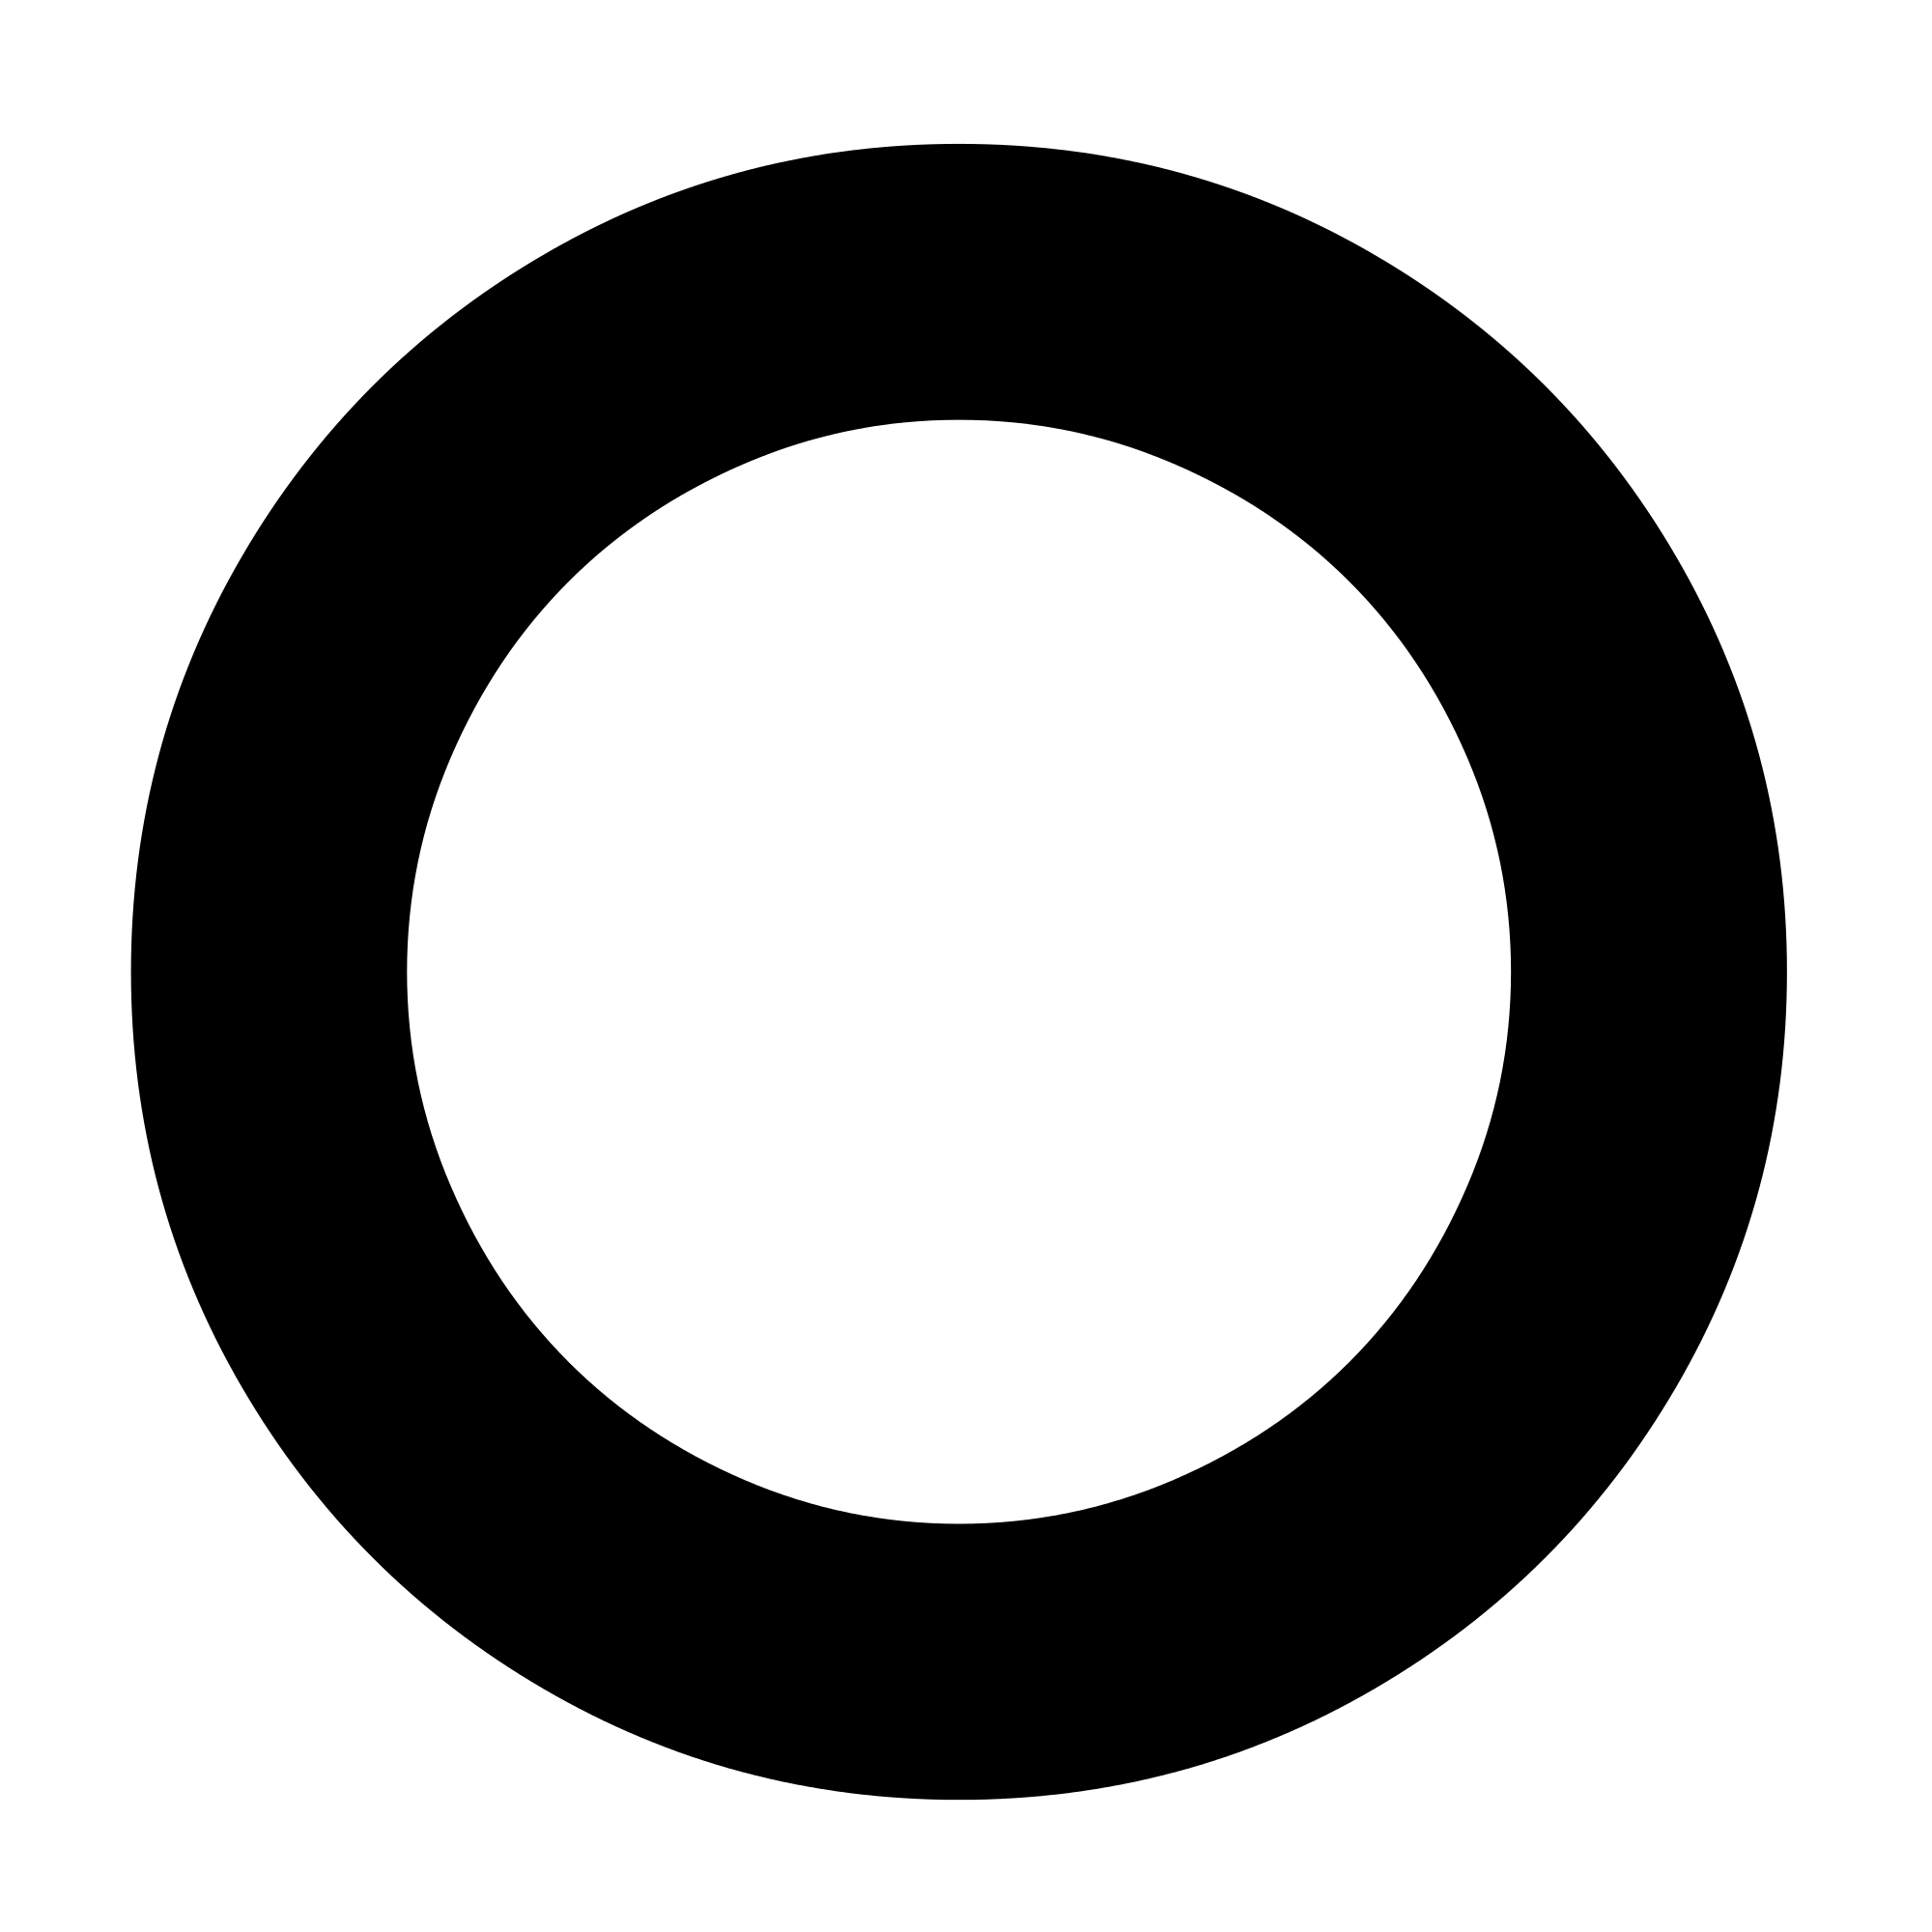 Blank Circle Logo Template